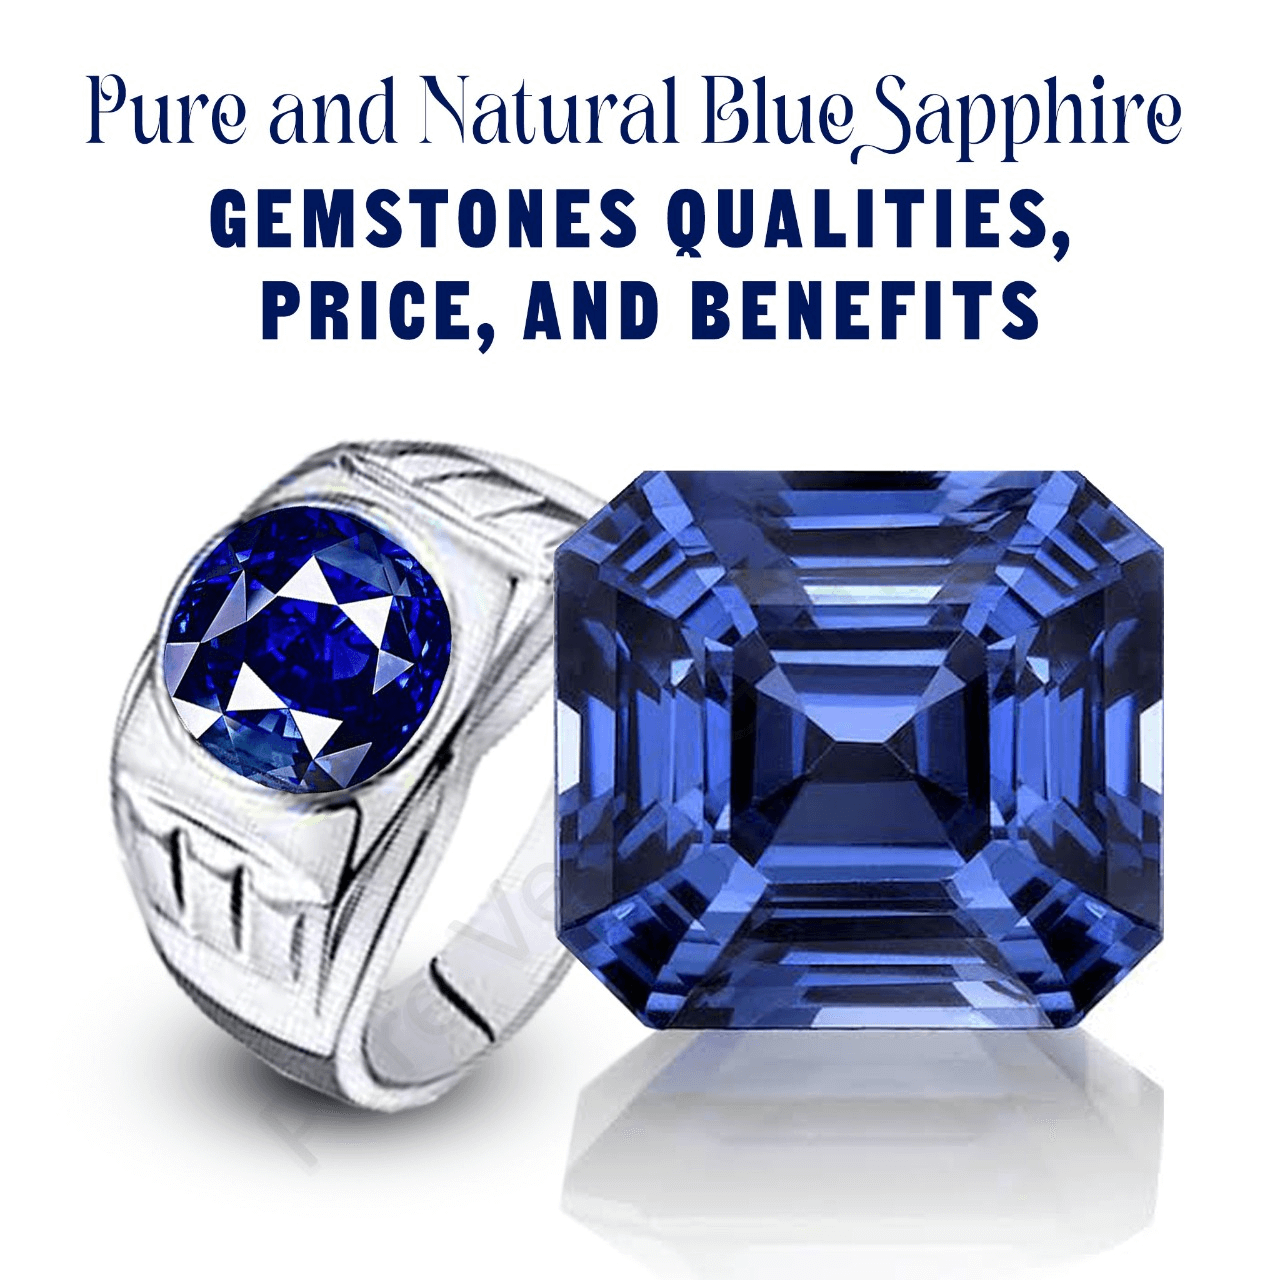 Does Pitambari Neelam Work Just Like A Natural Blue Sapphire?